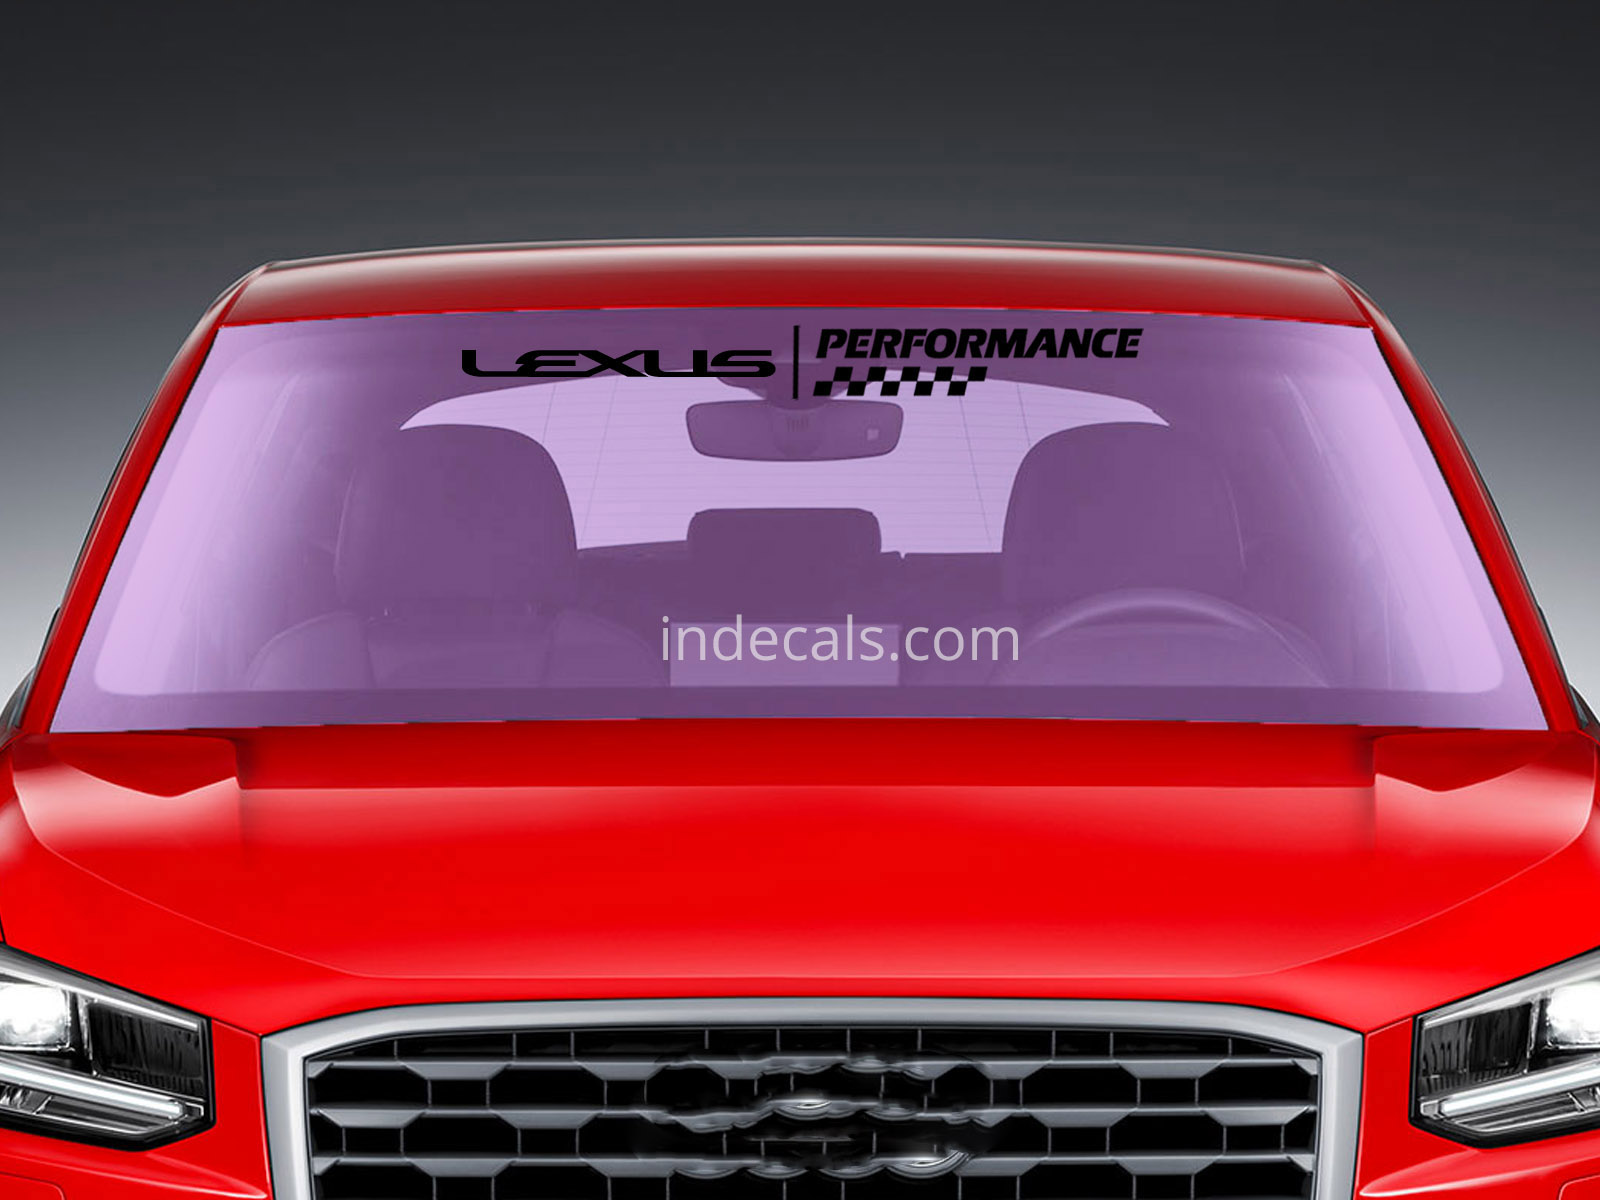 1 x Lexus Performance Sticker for Windshield or Back Window - Black